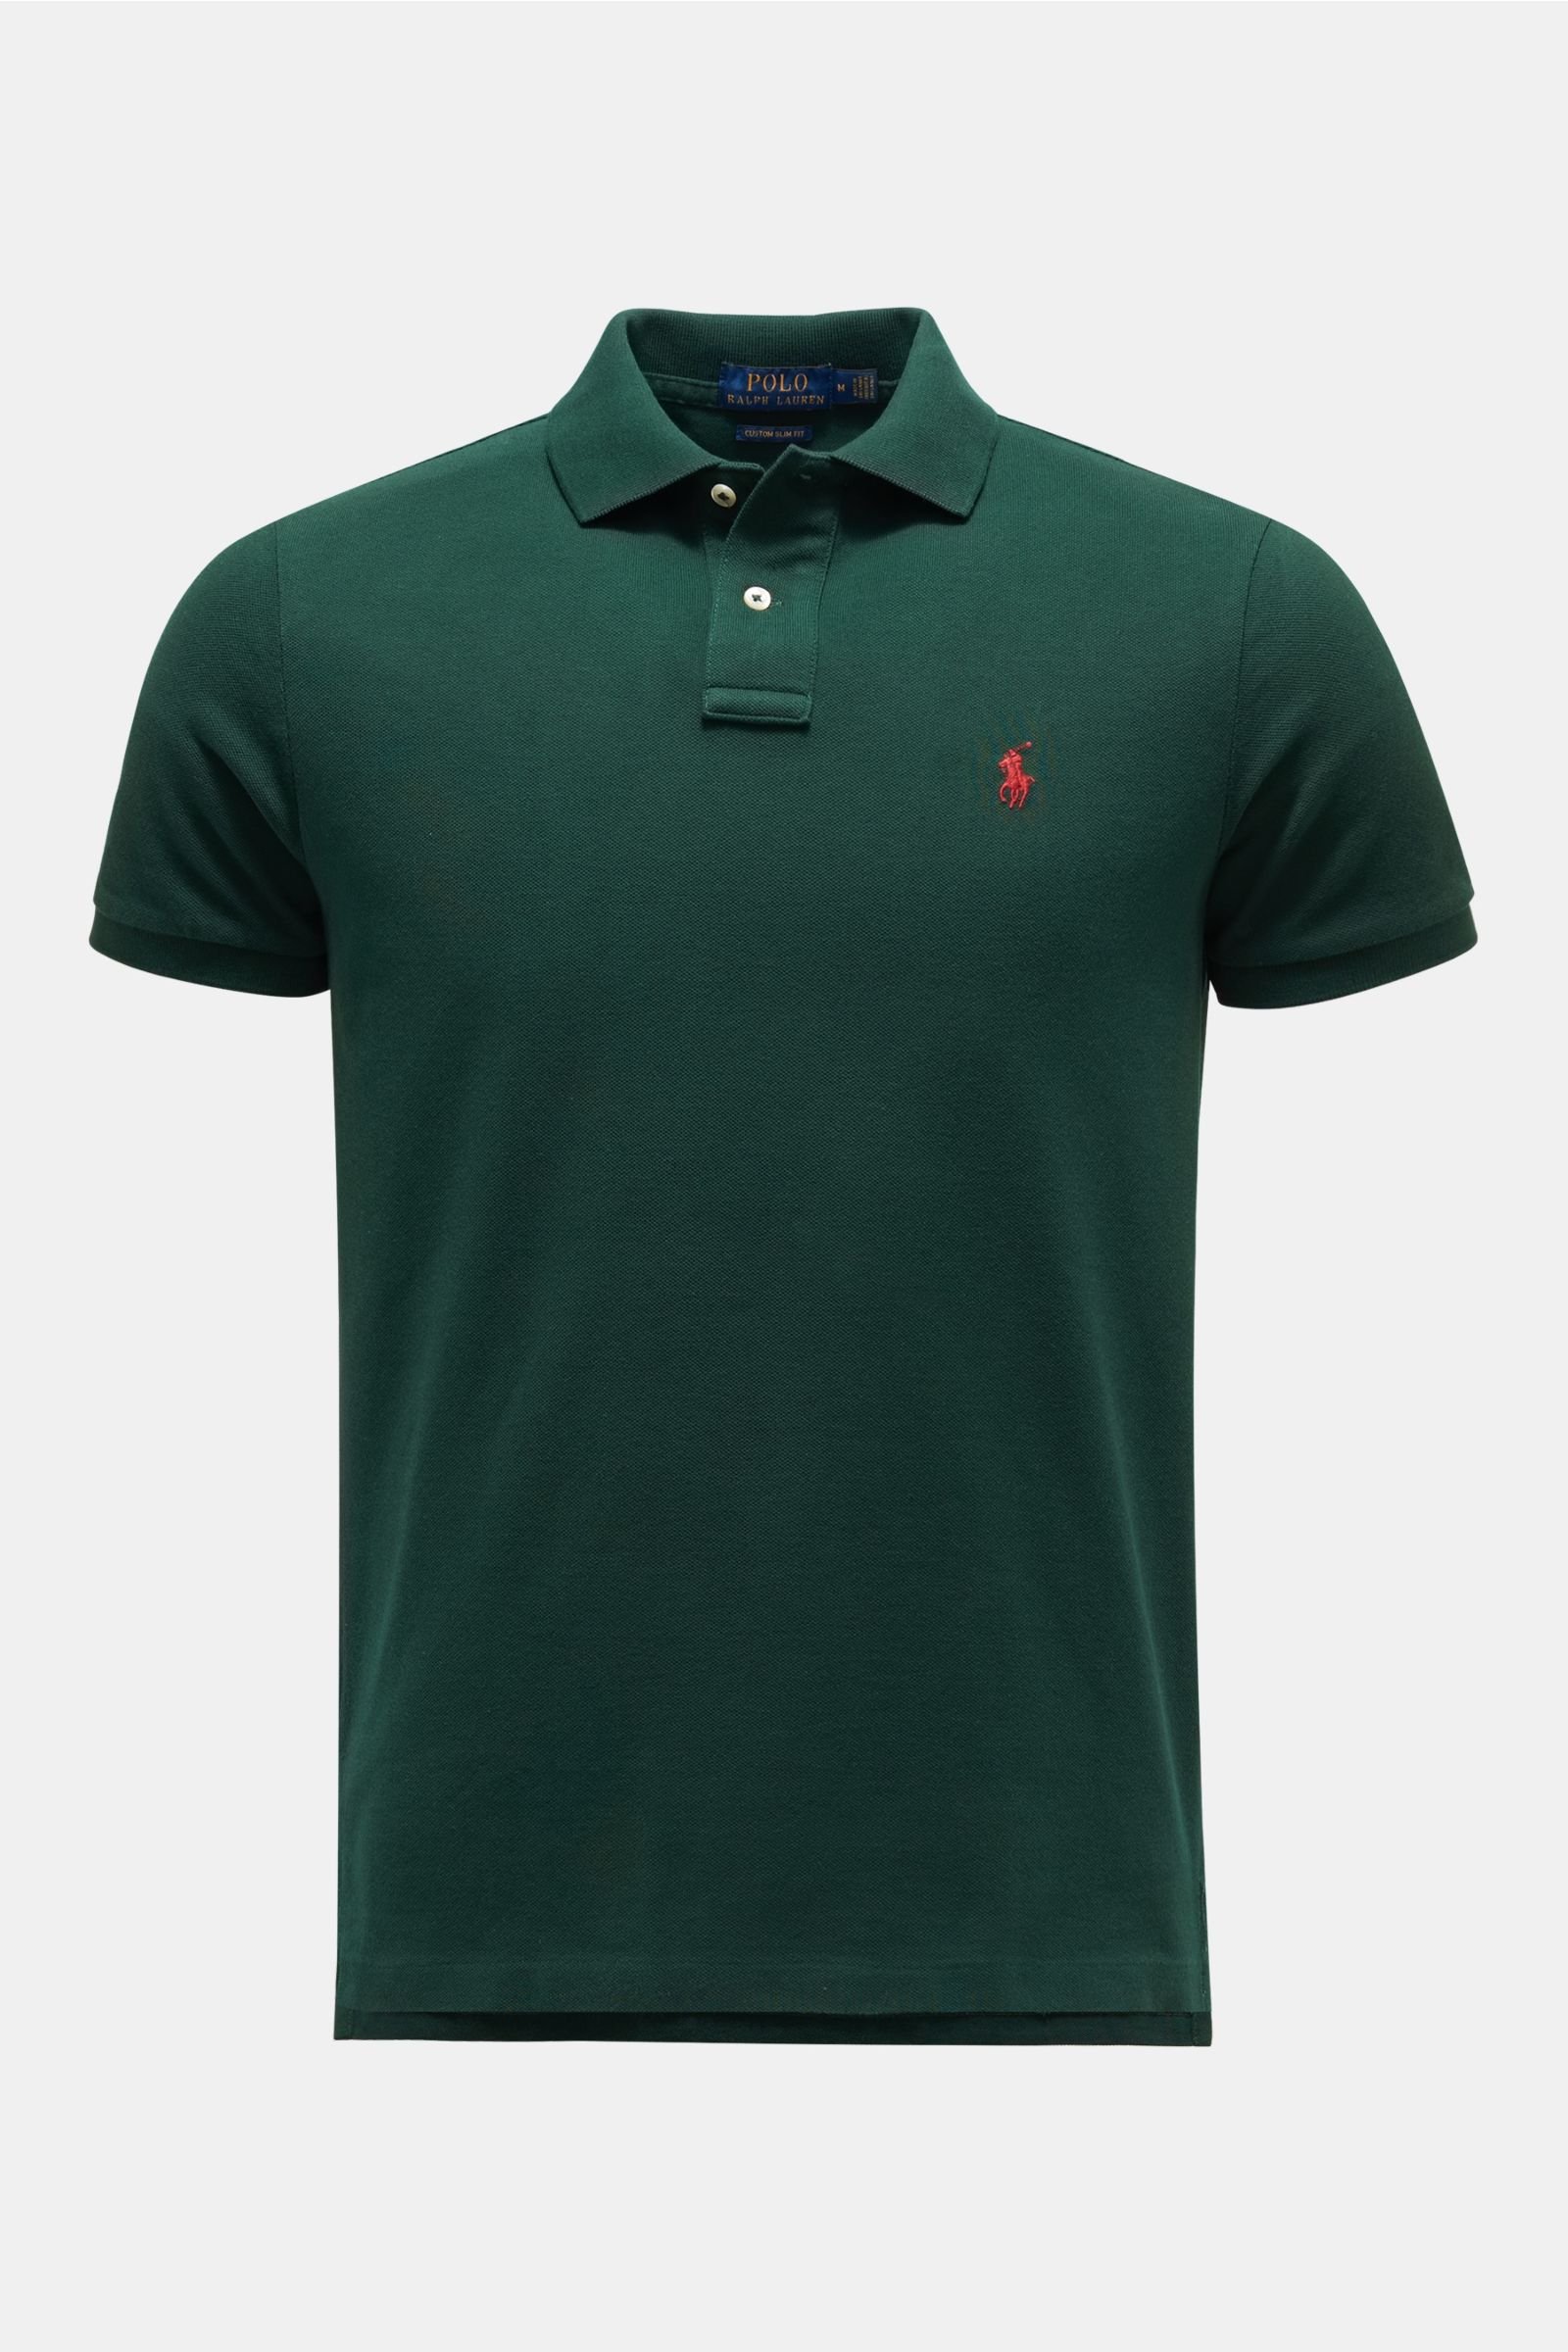 Polo shirt dark green